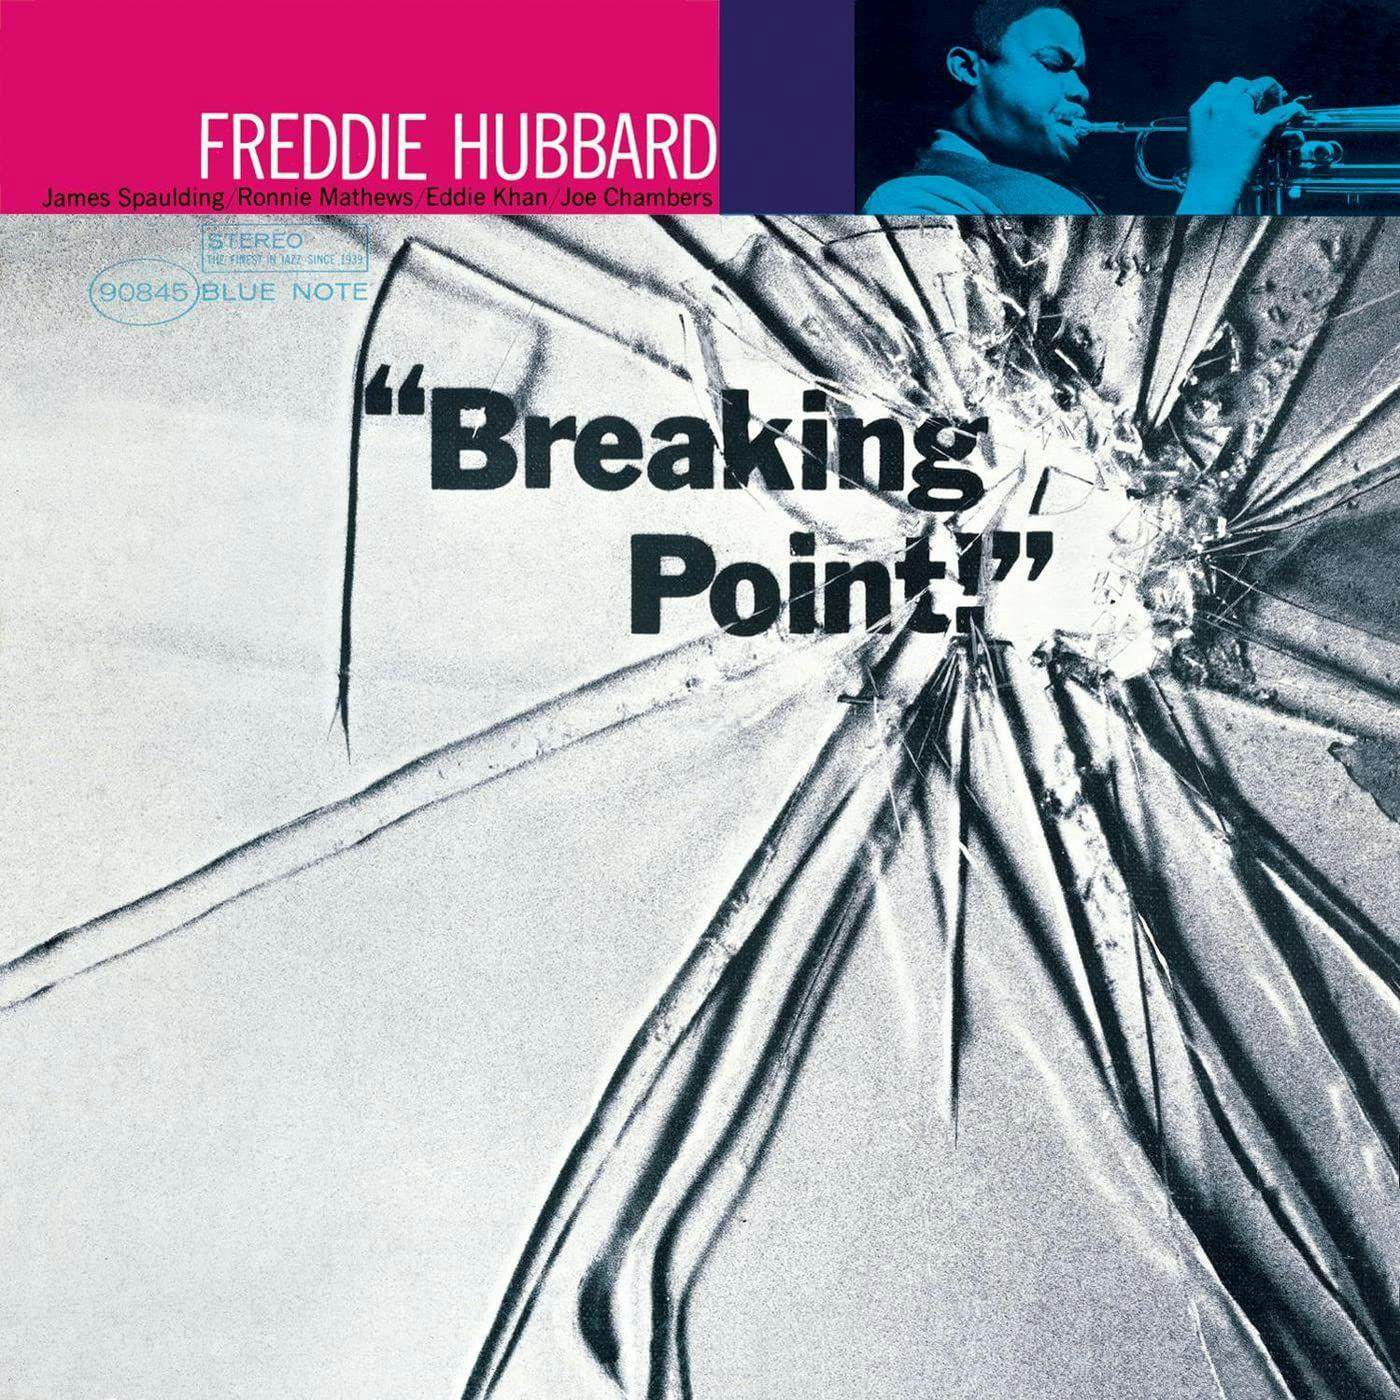 Freddie Hubbard Breaking Point Vinyl Record